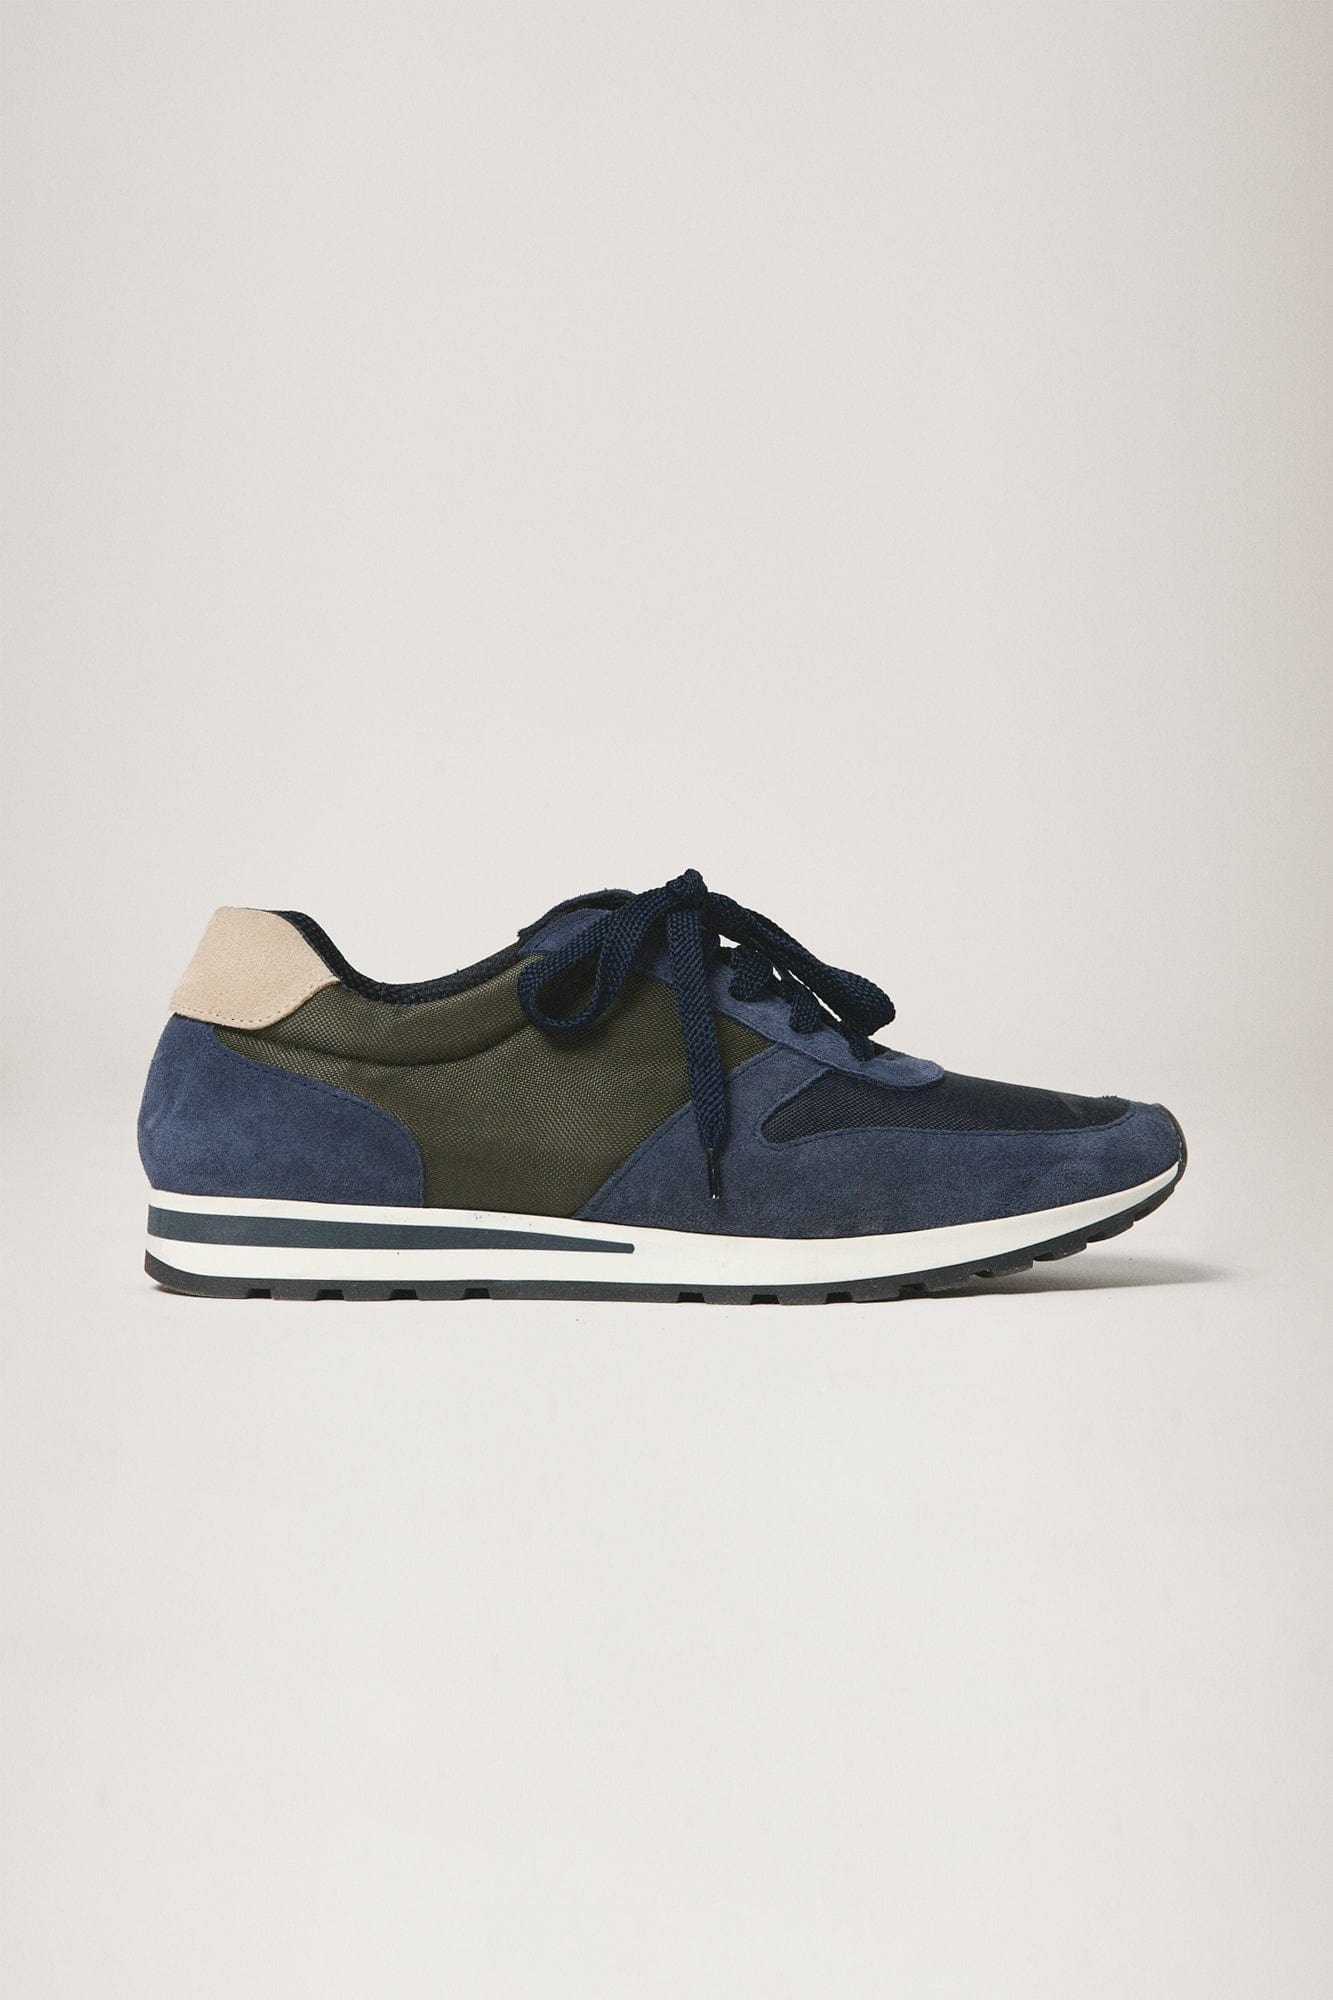 The Sneakers Azul y Verde